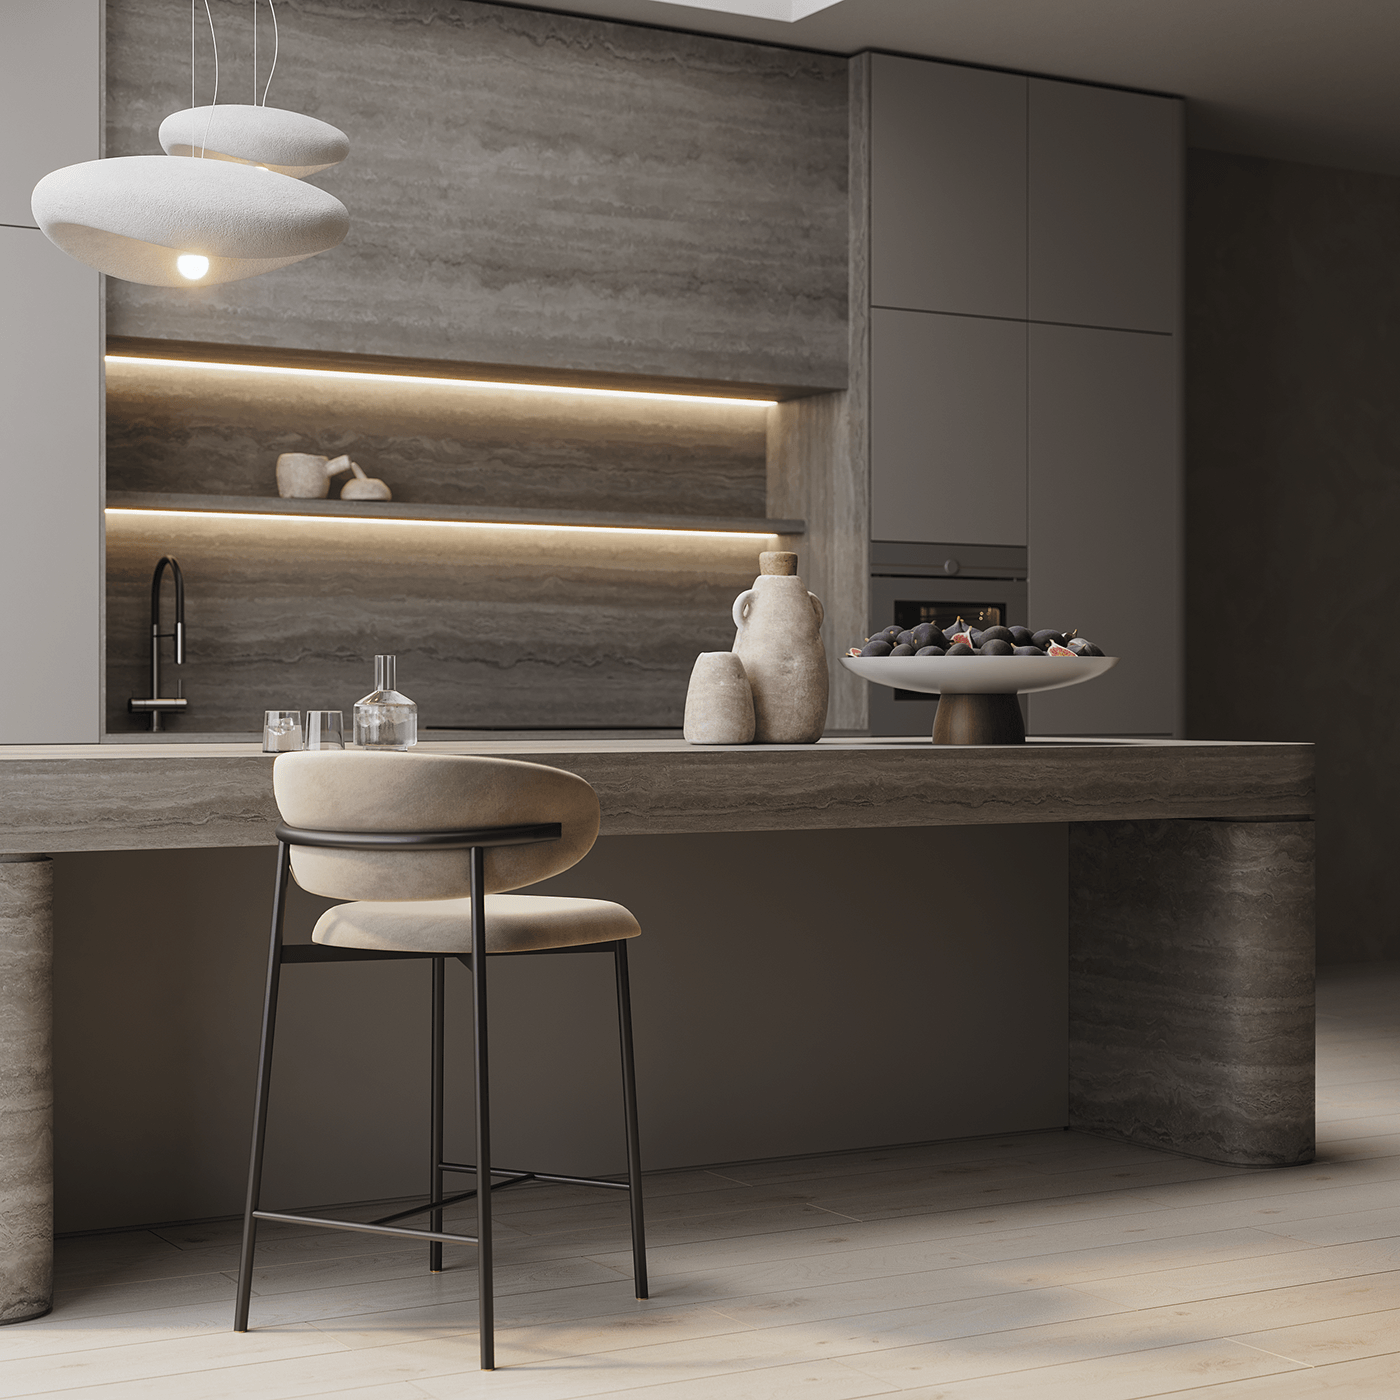 3ds max architecture visualization interior design  Render kitchen design furniture design  Interior corona archviz